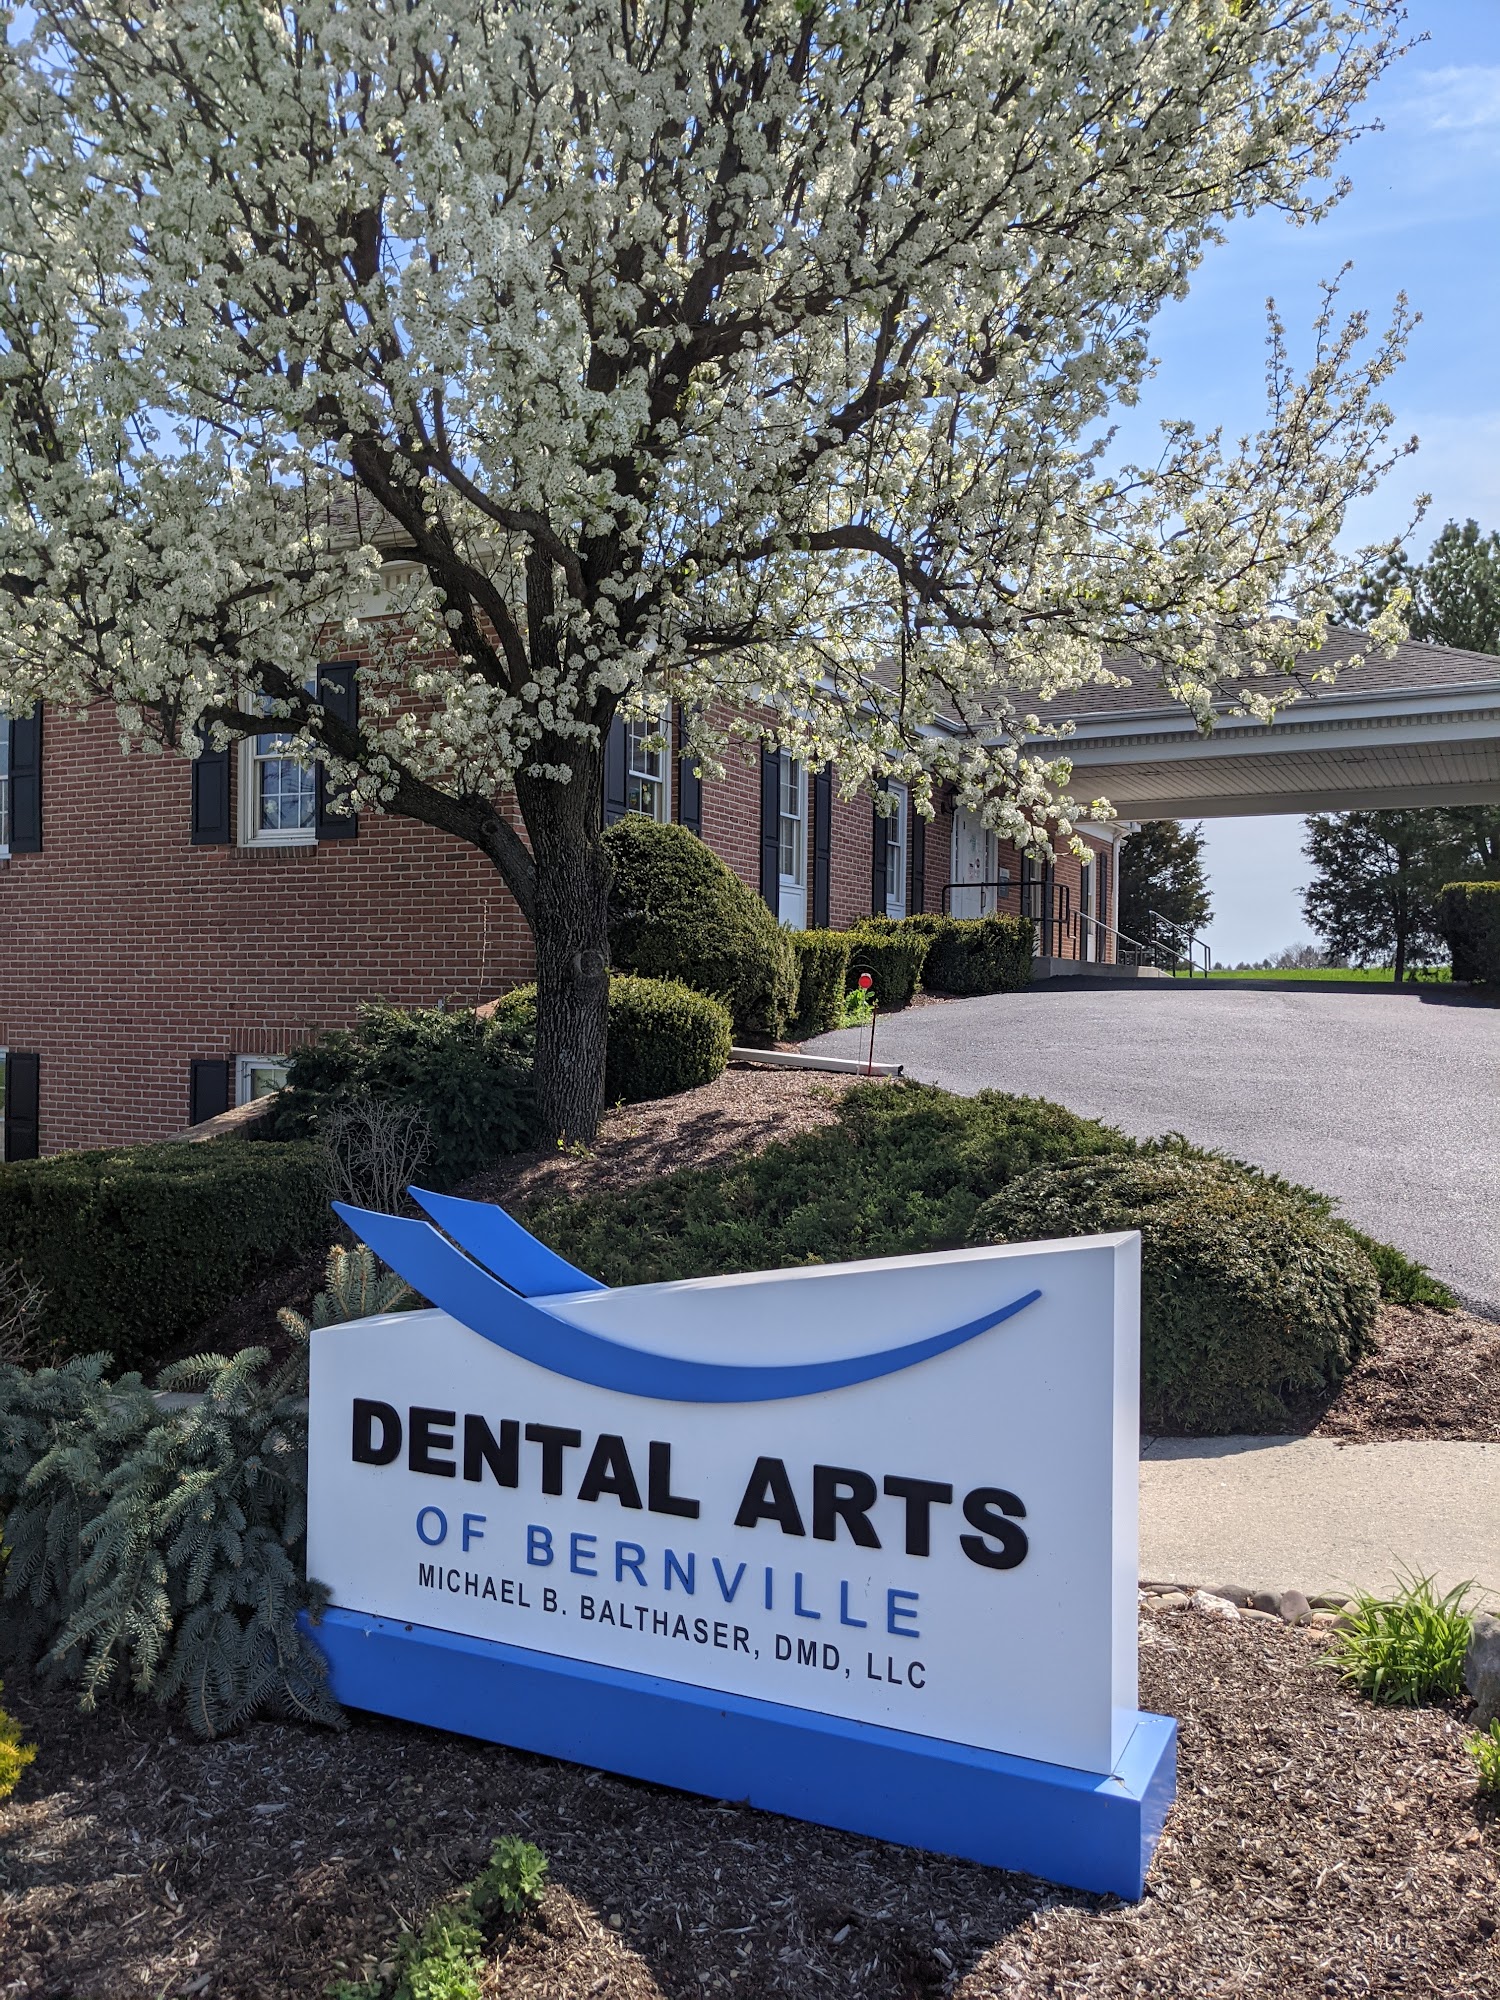 Dental Arts of Bernville 7175 Bernville Rd, Bernville Pennsylvania 19506